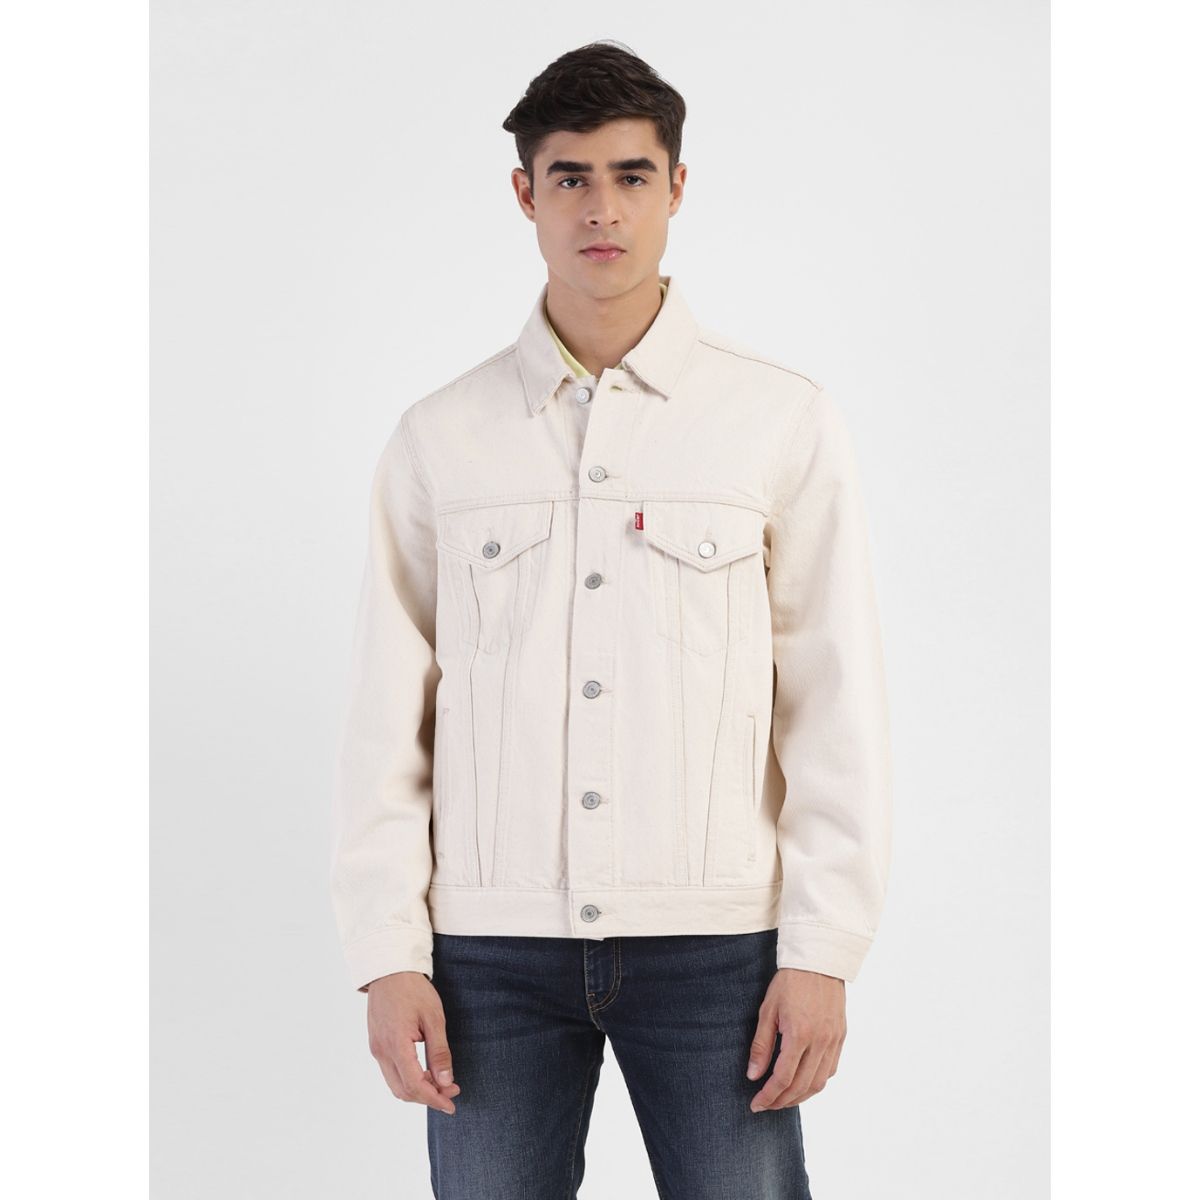 Buy Levi's Grey Cotton Regular Fit Denim Jacket for Mens Online @ Tata CLiQ